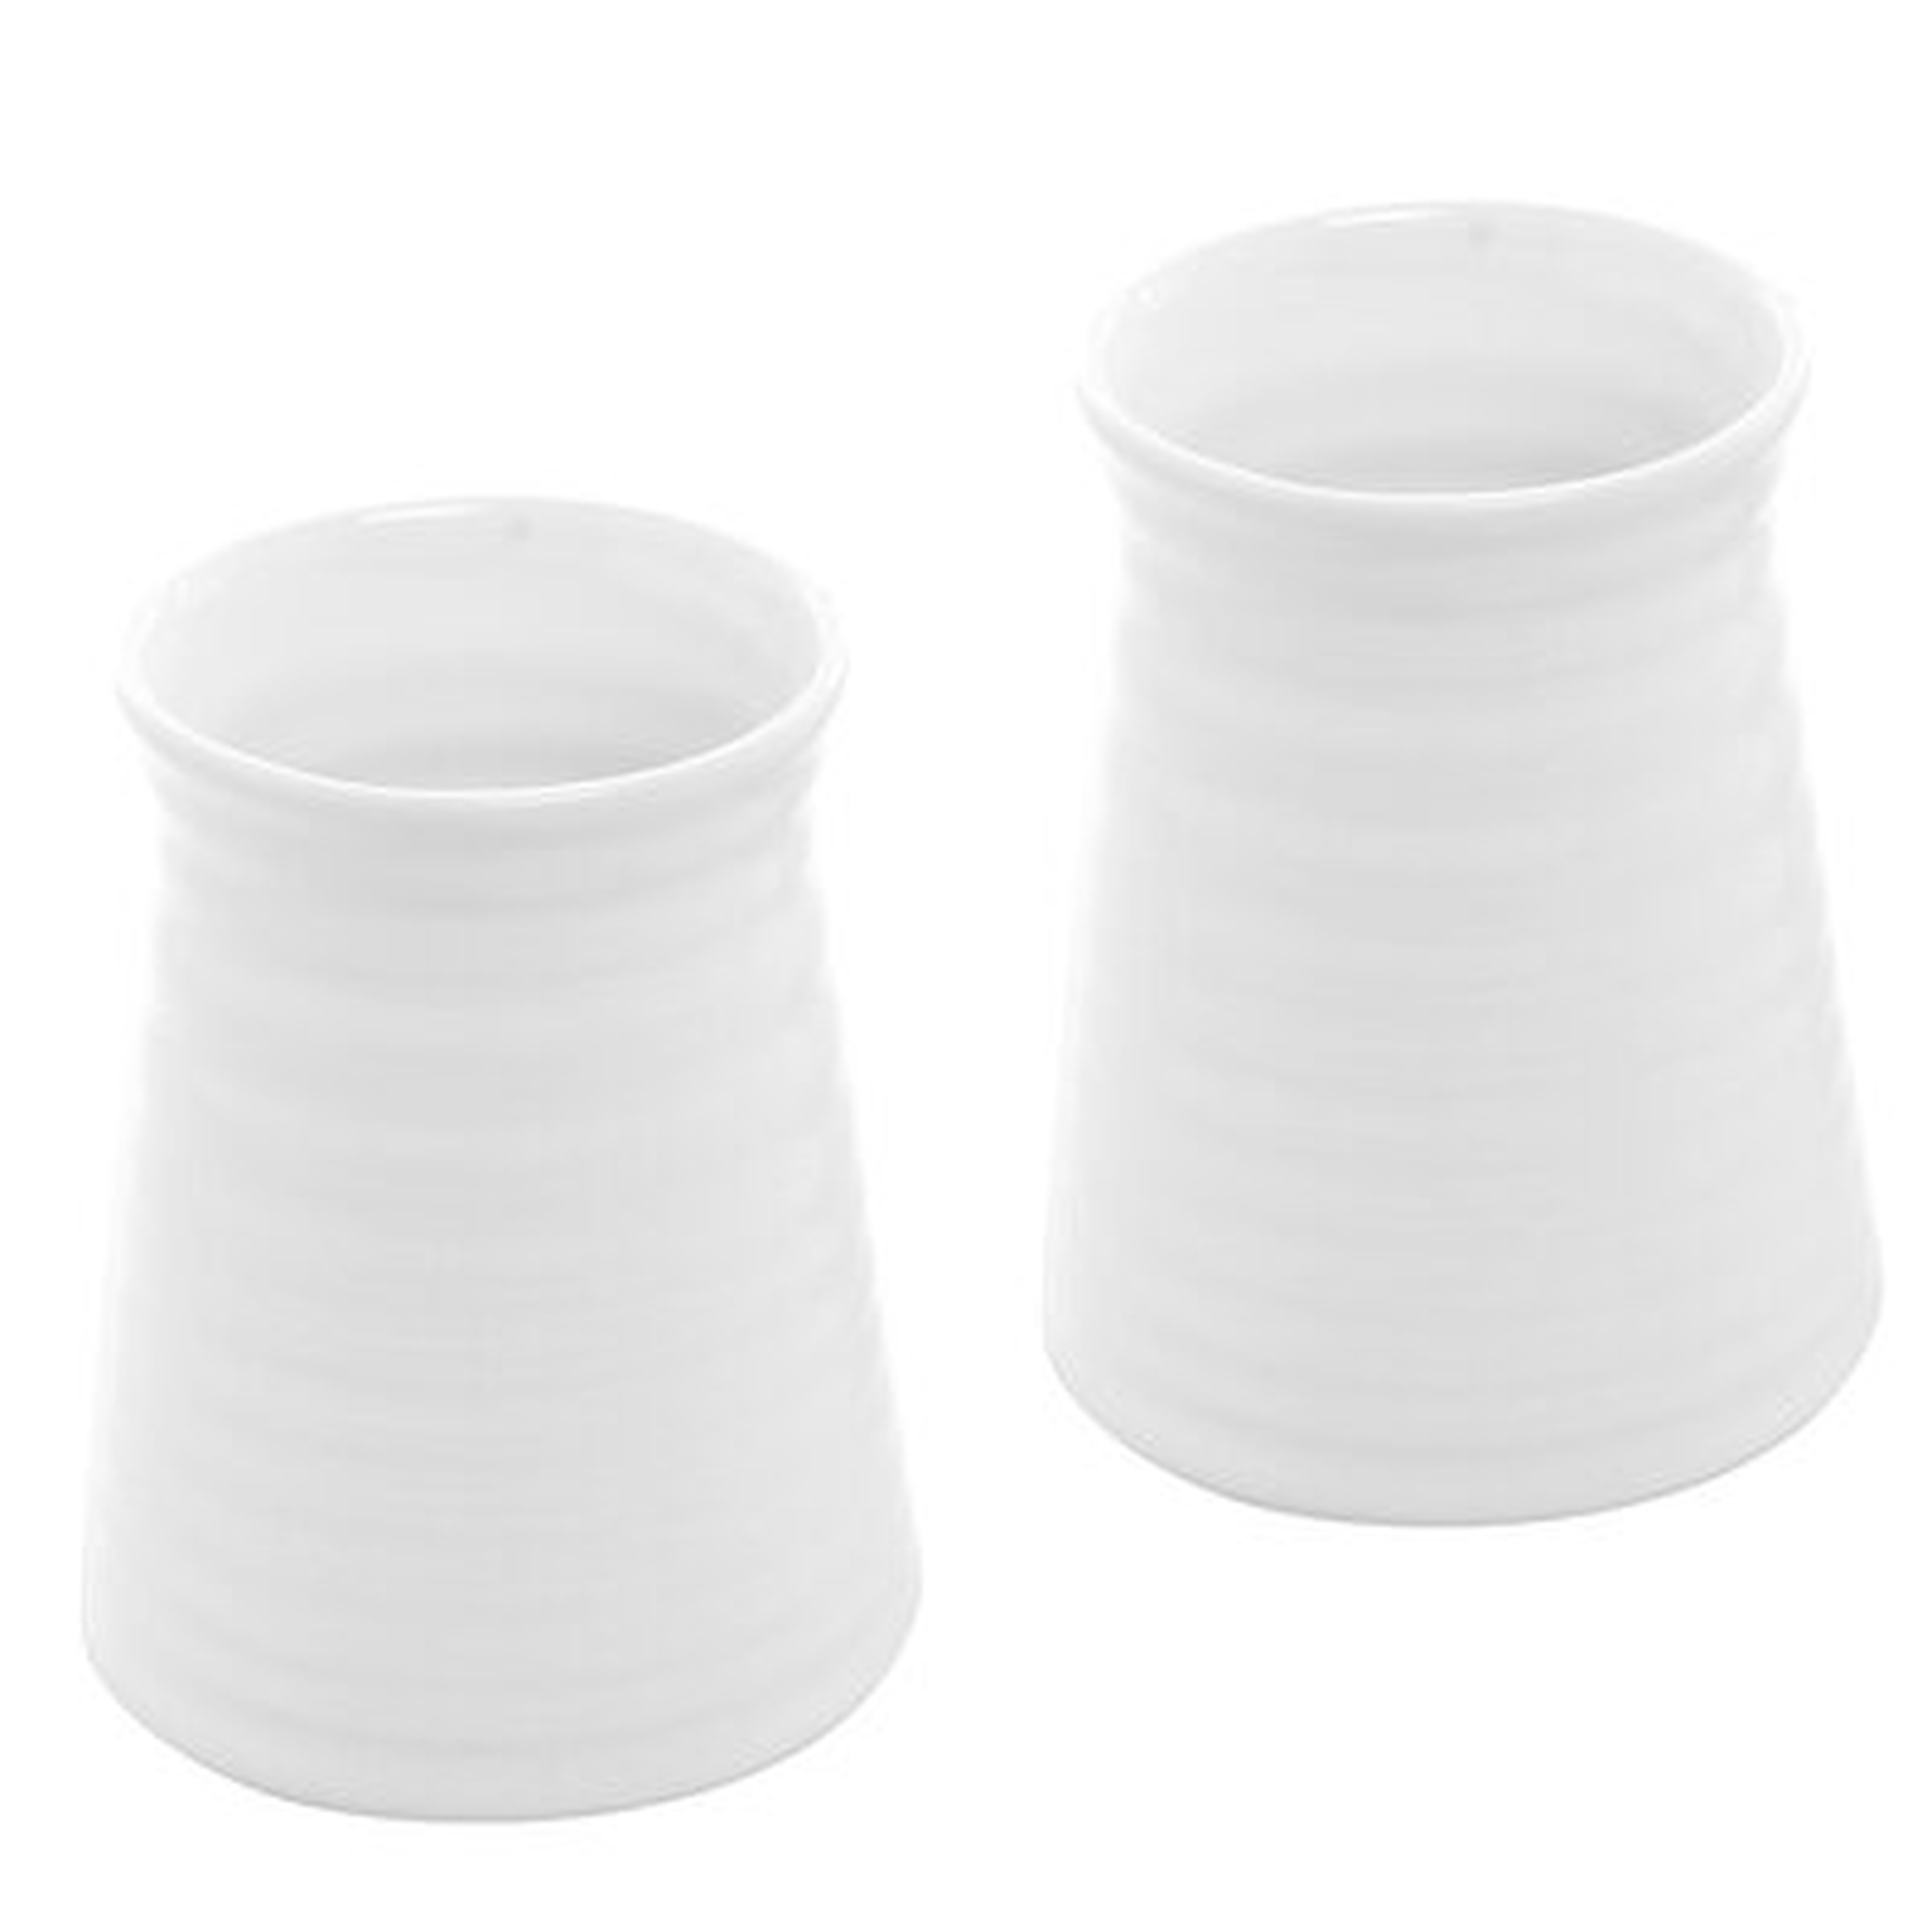 2 Piece White Ceramic Table Vase Set - Wayfair